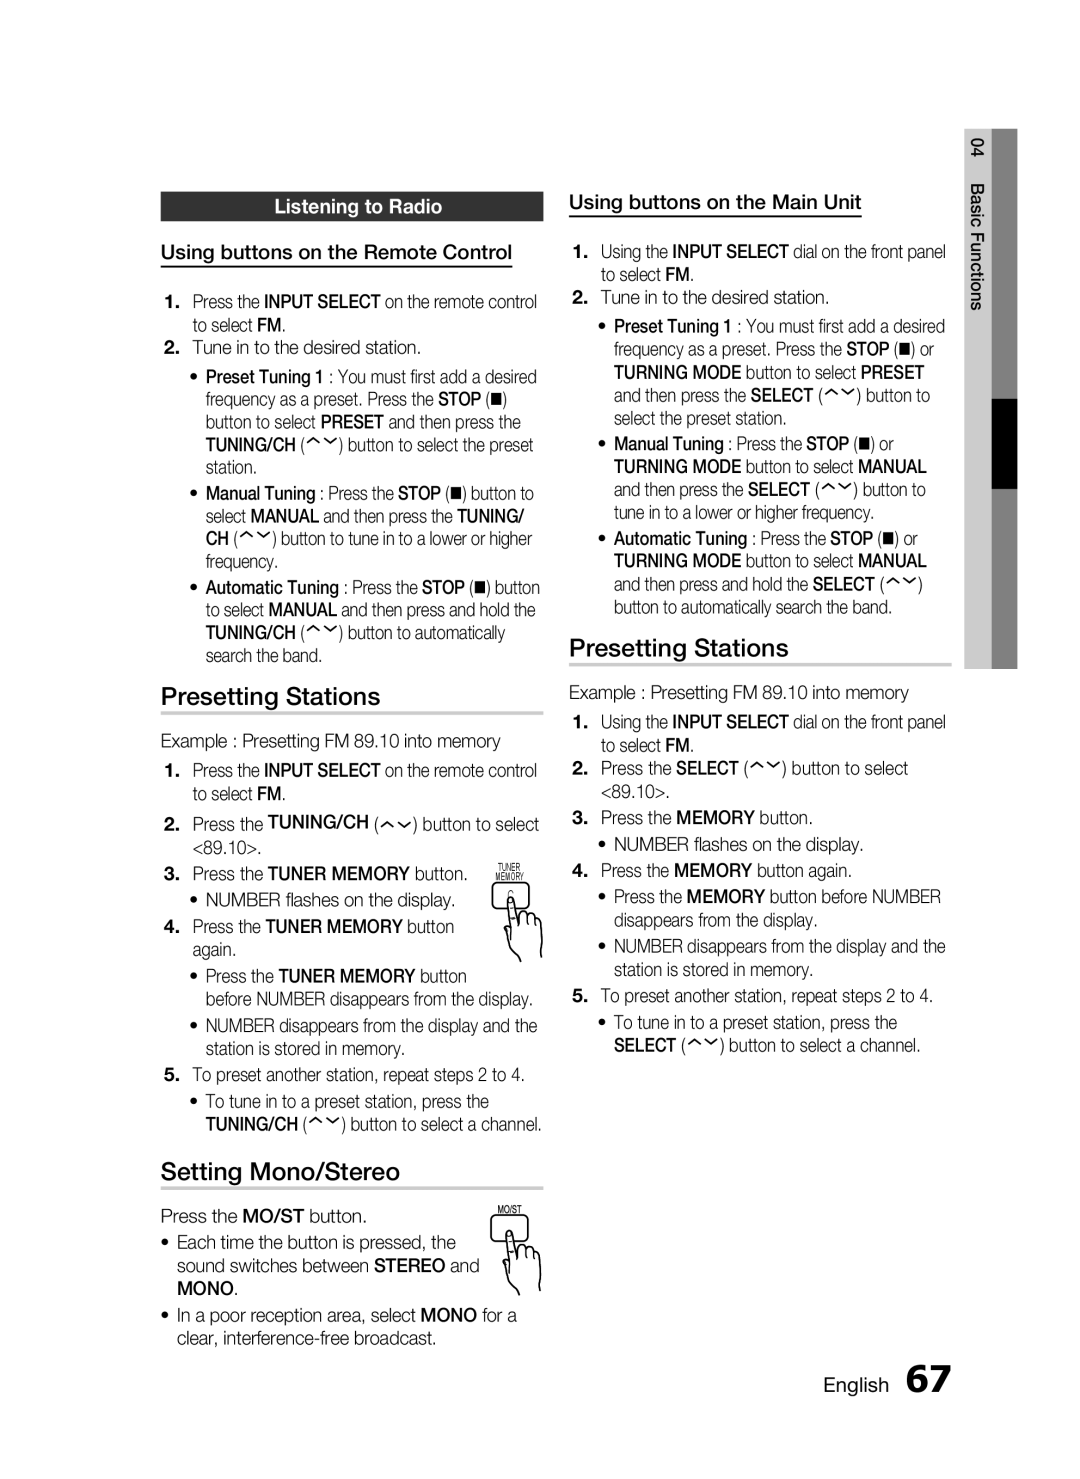 Samsung HW-D7000 user manual Presetting Stations, Setting Mono/Stereo, Listening to Radio 